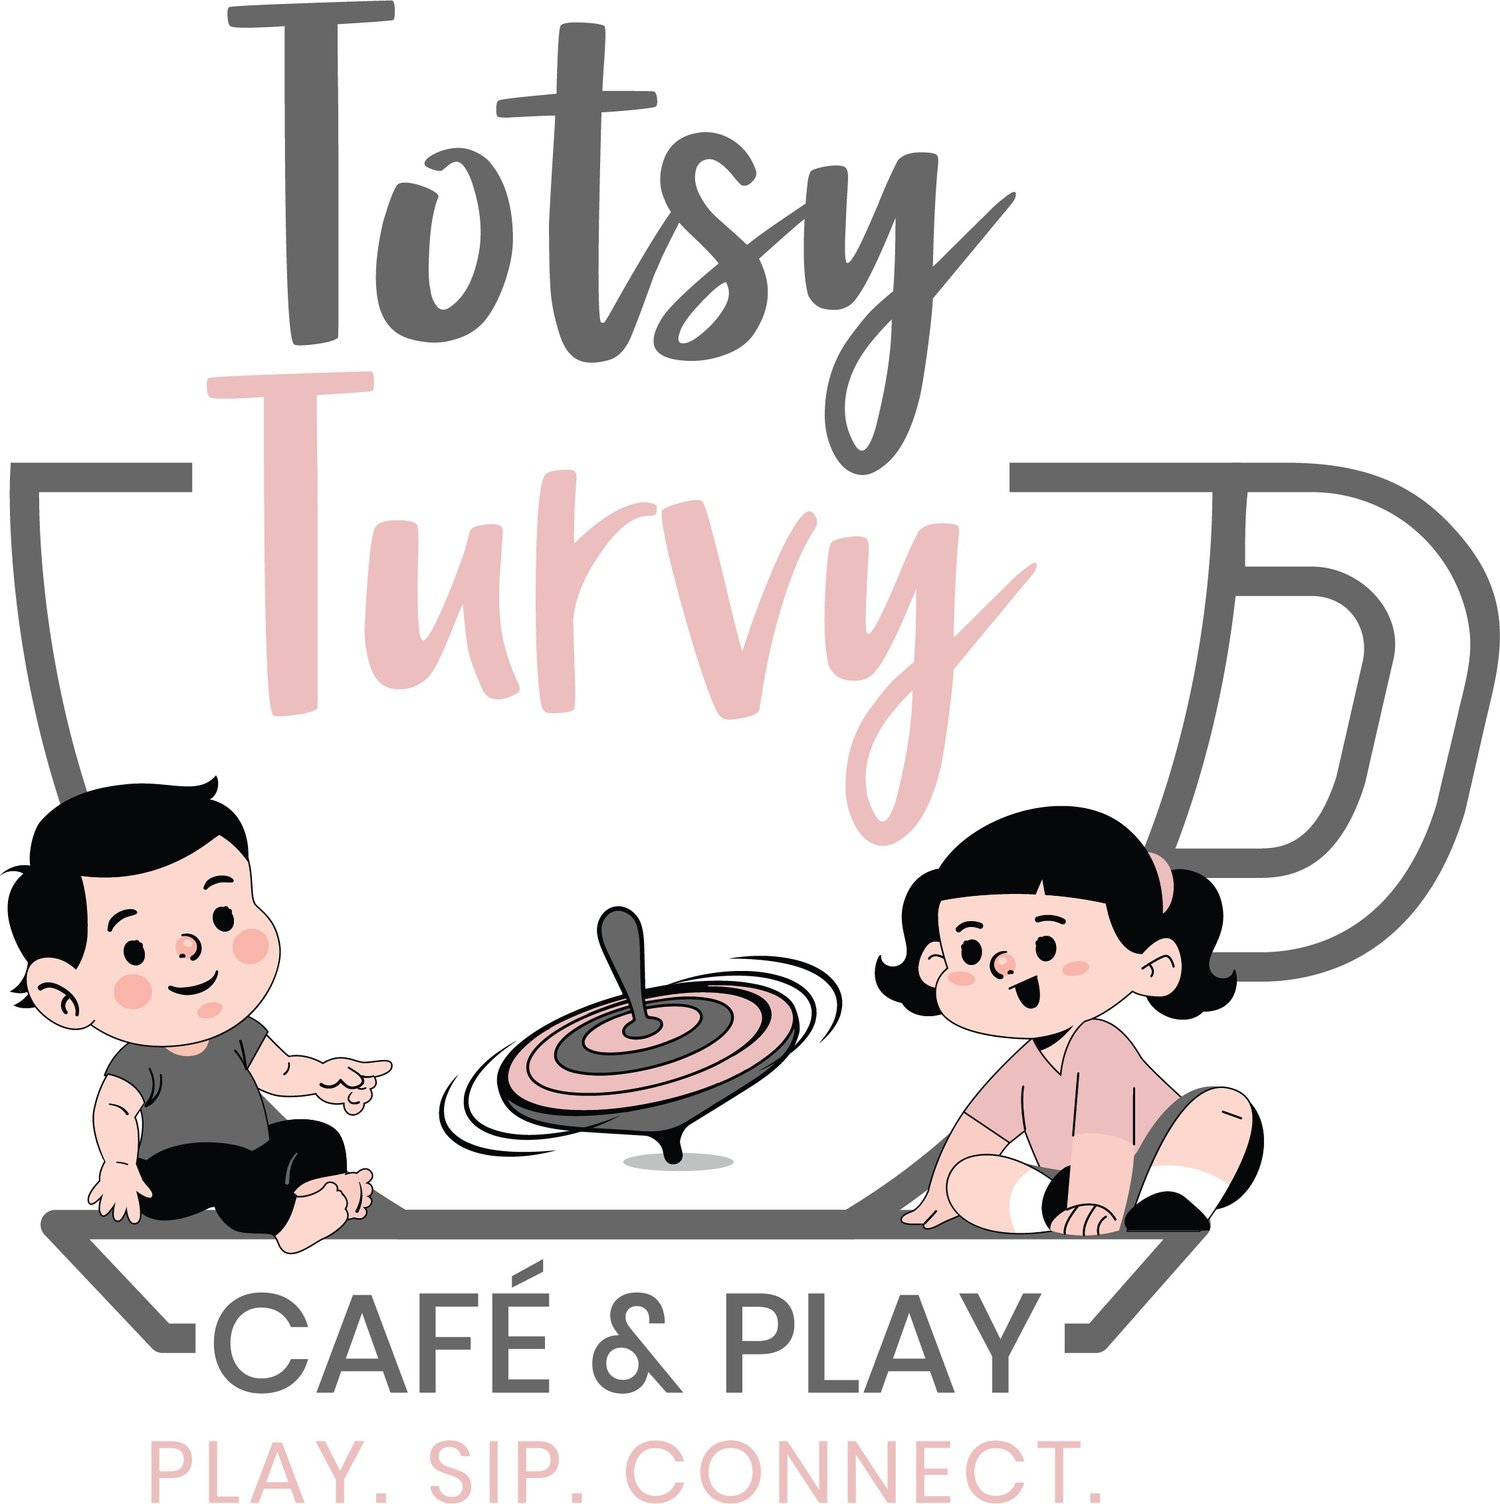 Totsy Turvy Cafe and Play